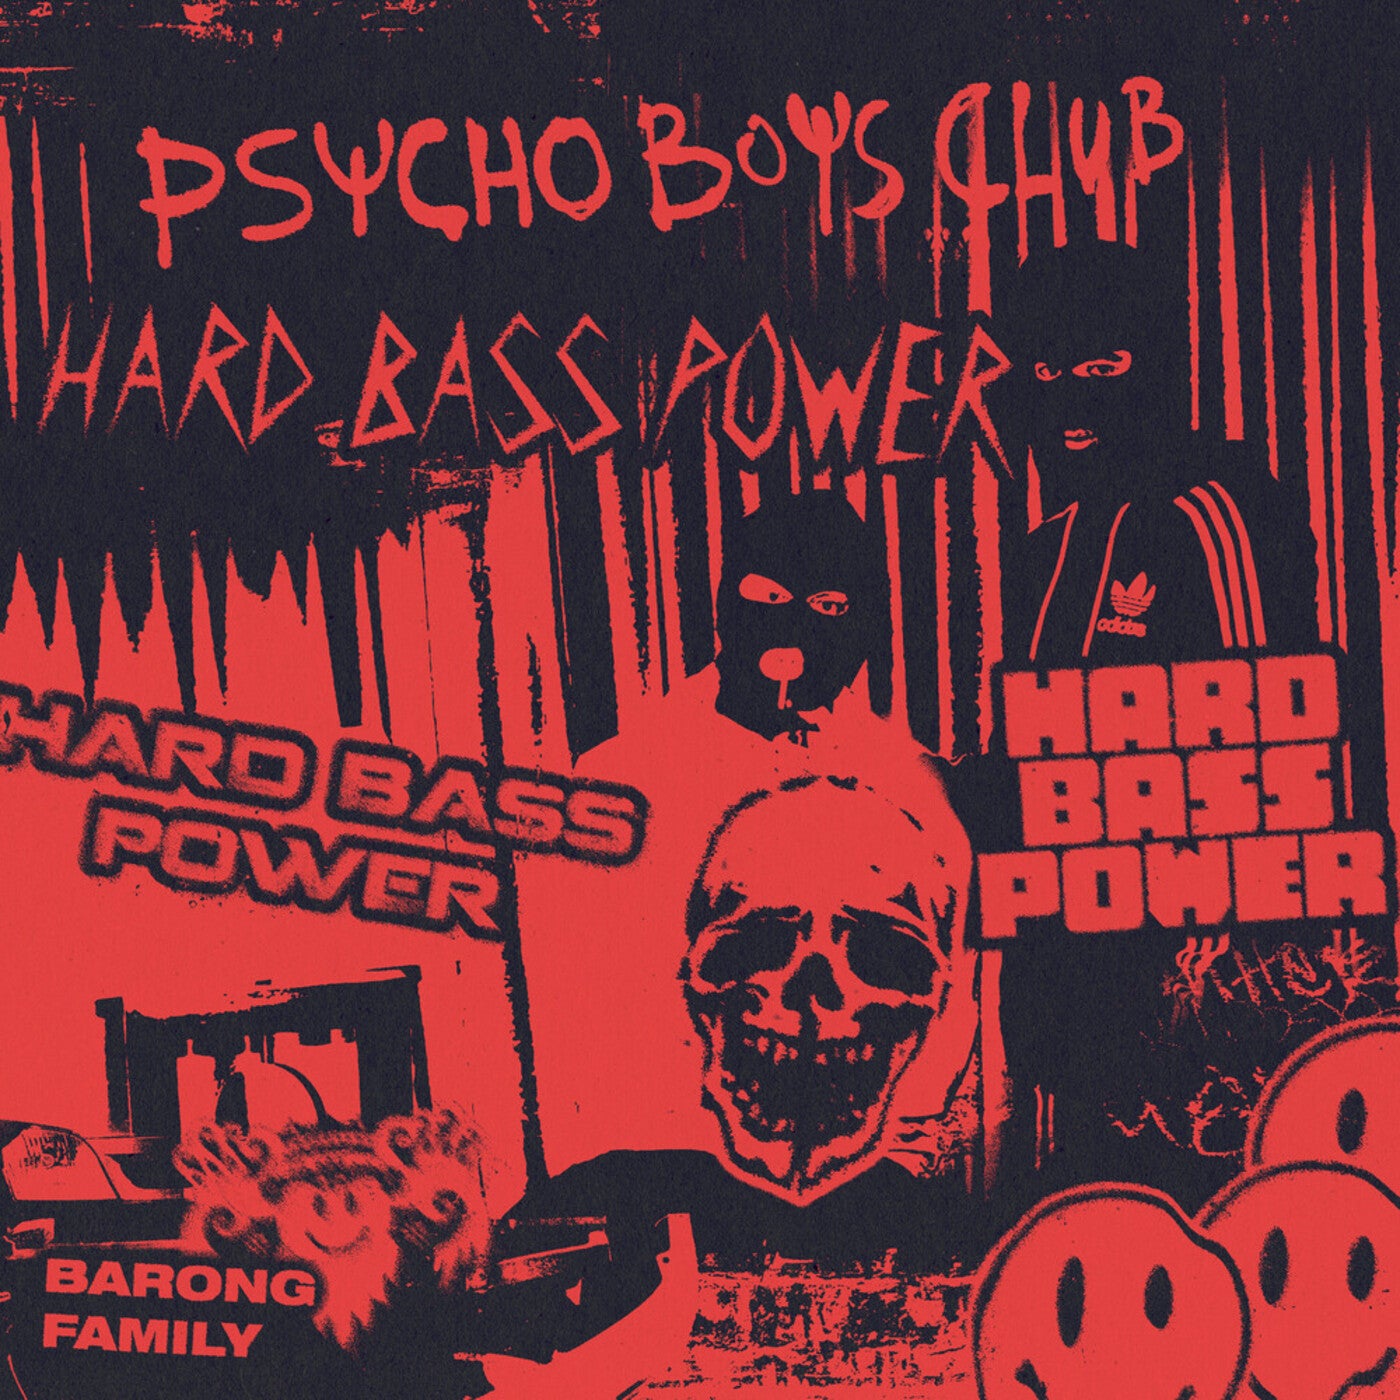 Grand sunrise Doctor of Philosophy Hard Bass Power (Original Mix) by Psycho Boys Club on Beatport